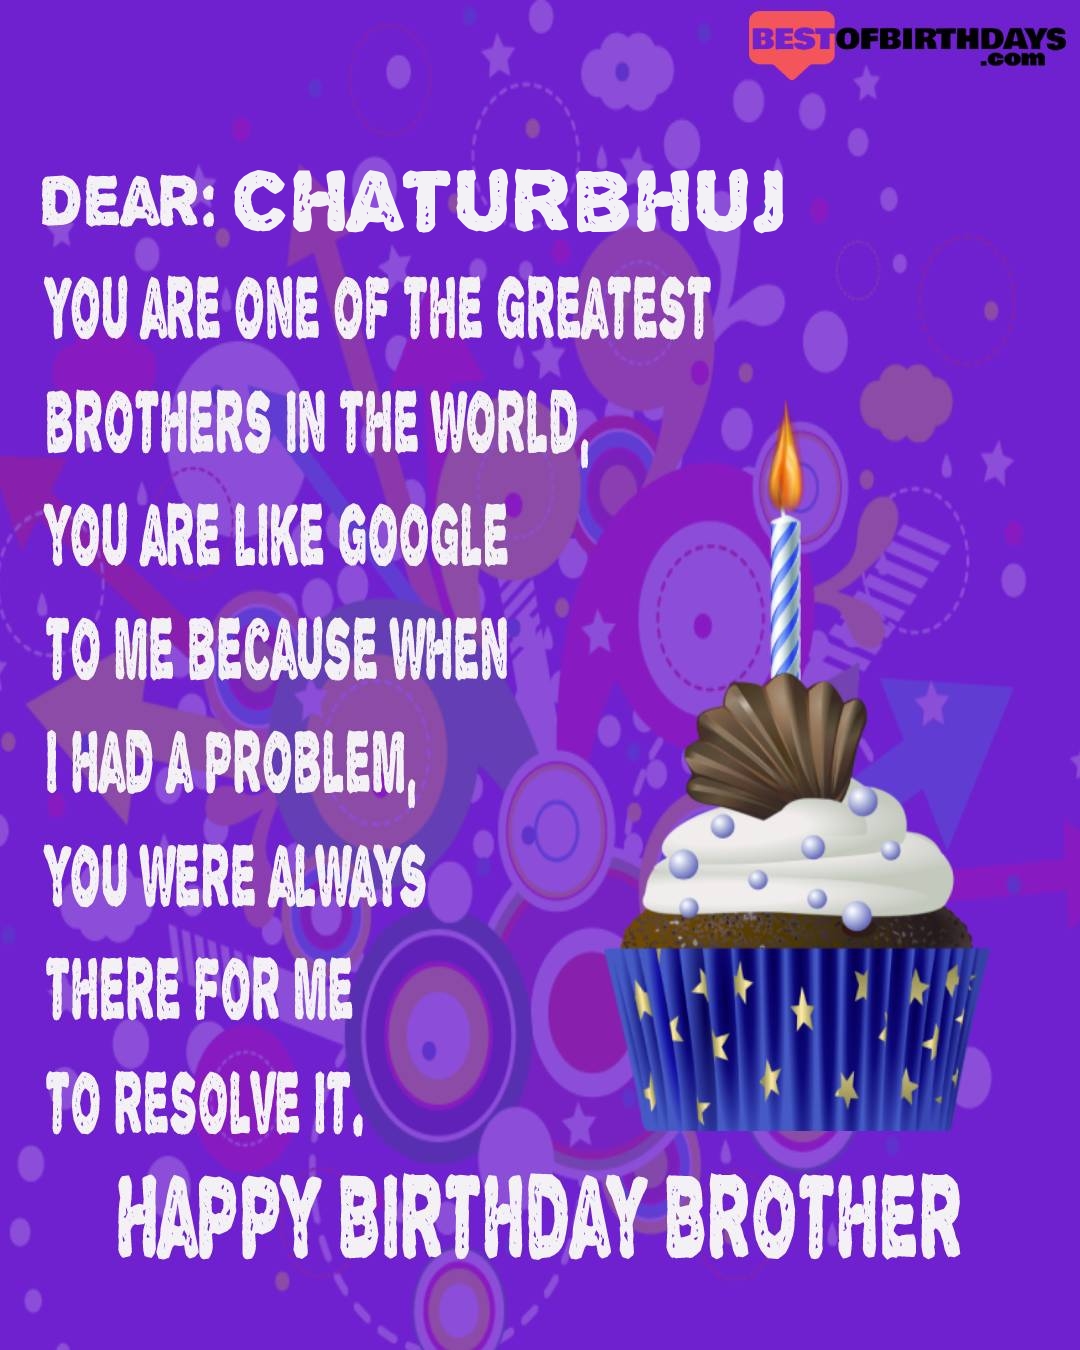 Happy birthday chaturbhuj bhai brother bro